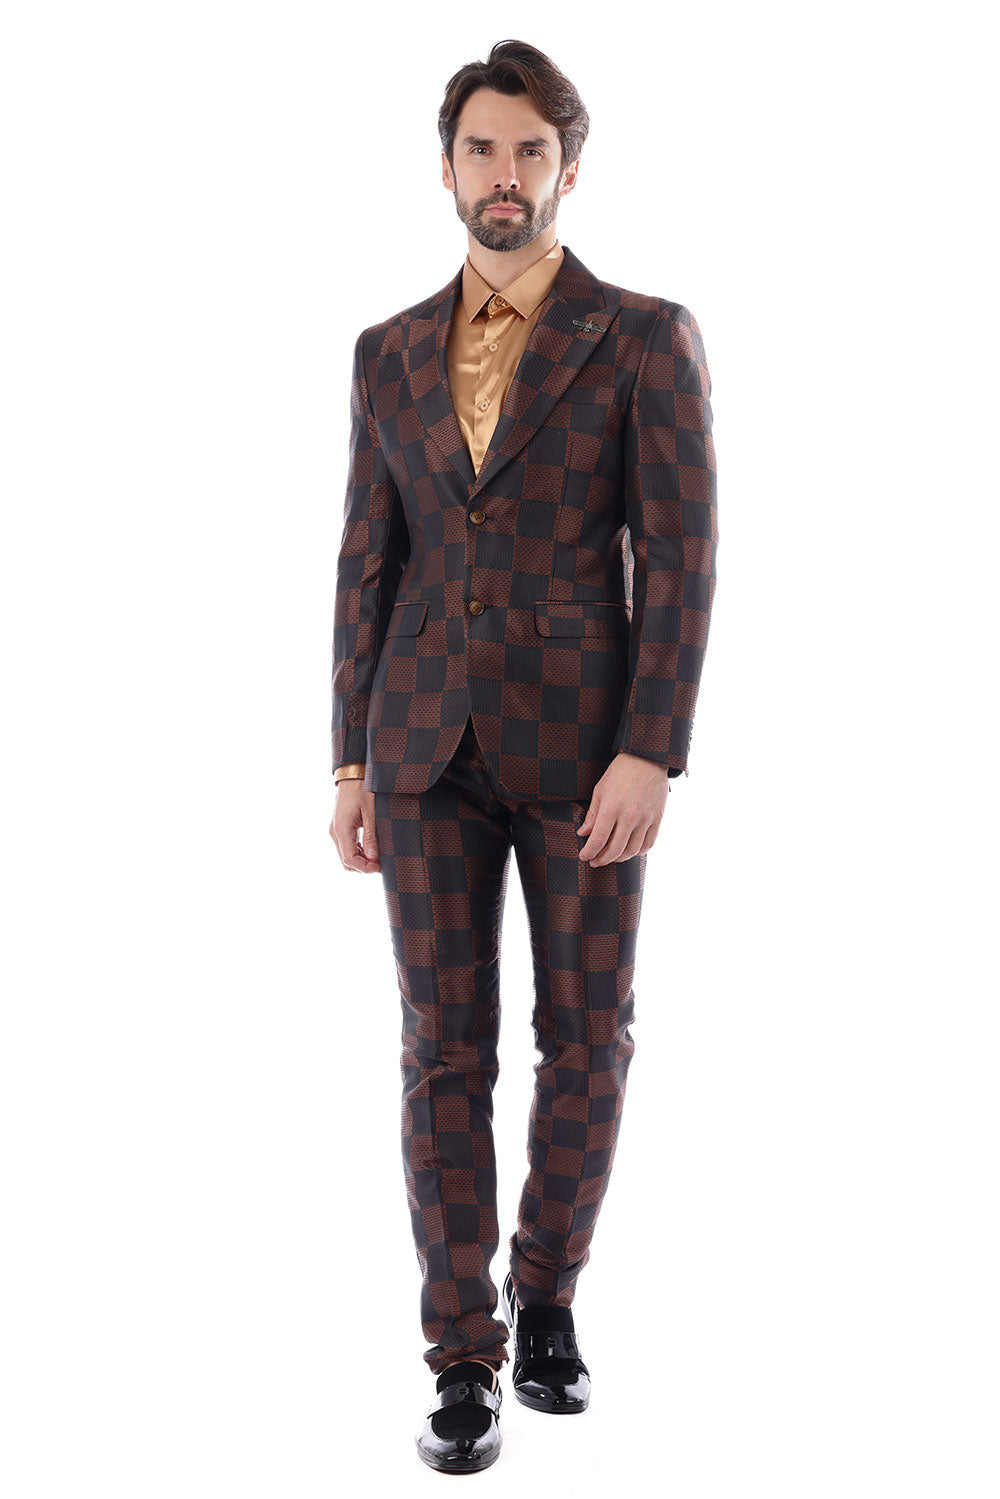 BARABAS Men's Checkered Pattern Peak Lapel Suit 4SU09 Coffee Black